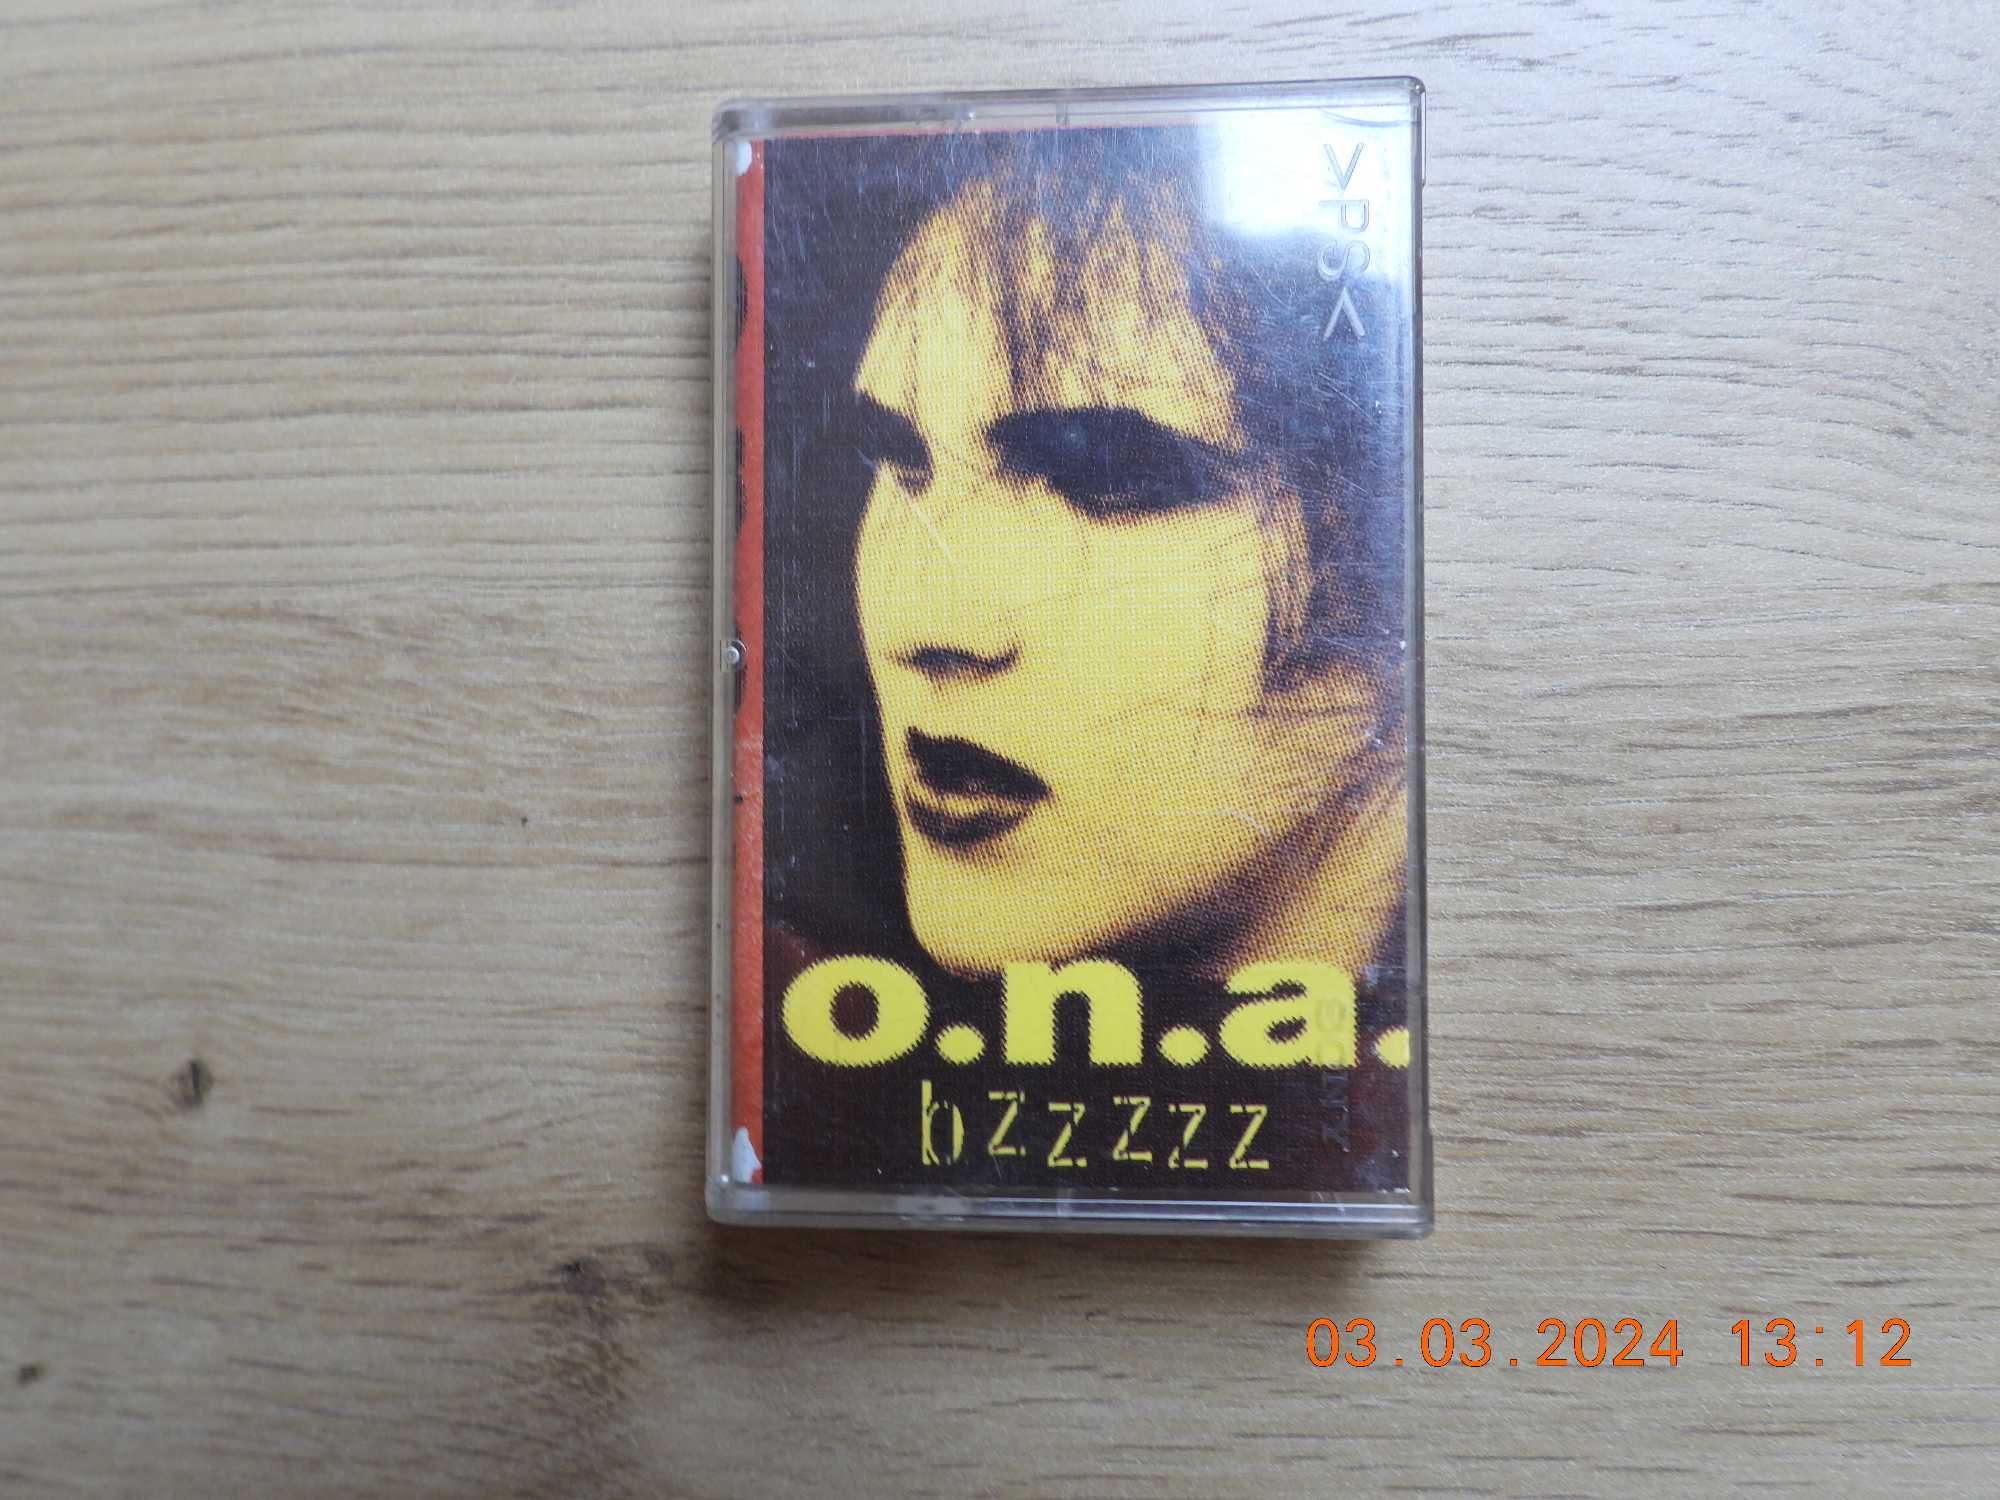 Wkładka/okładka kasety: O.N.A. - Bzzzzz